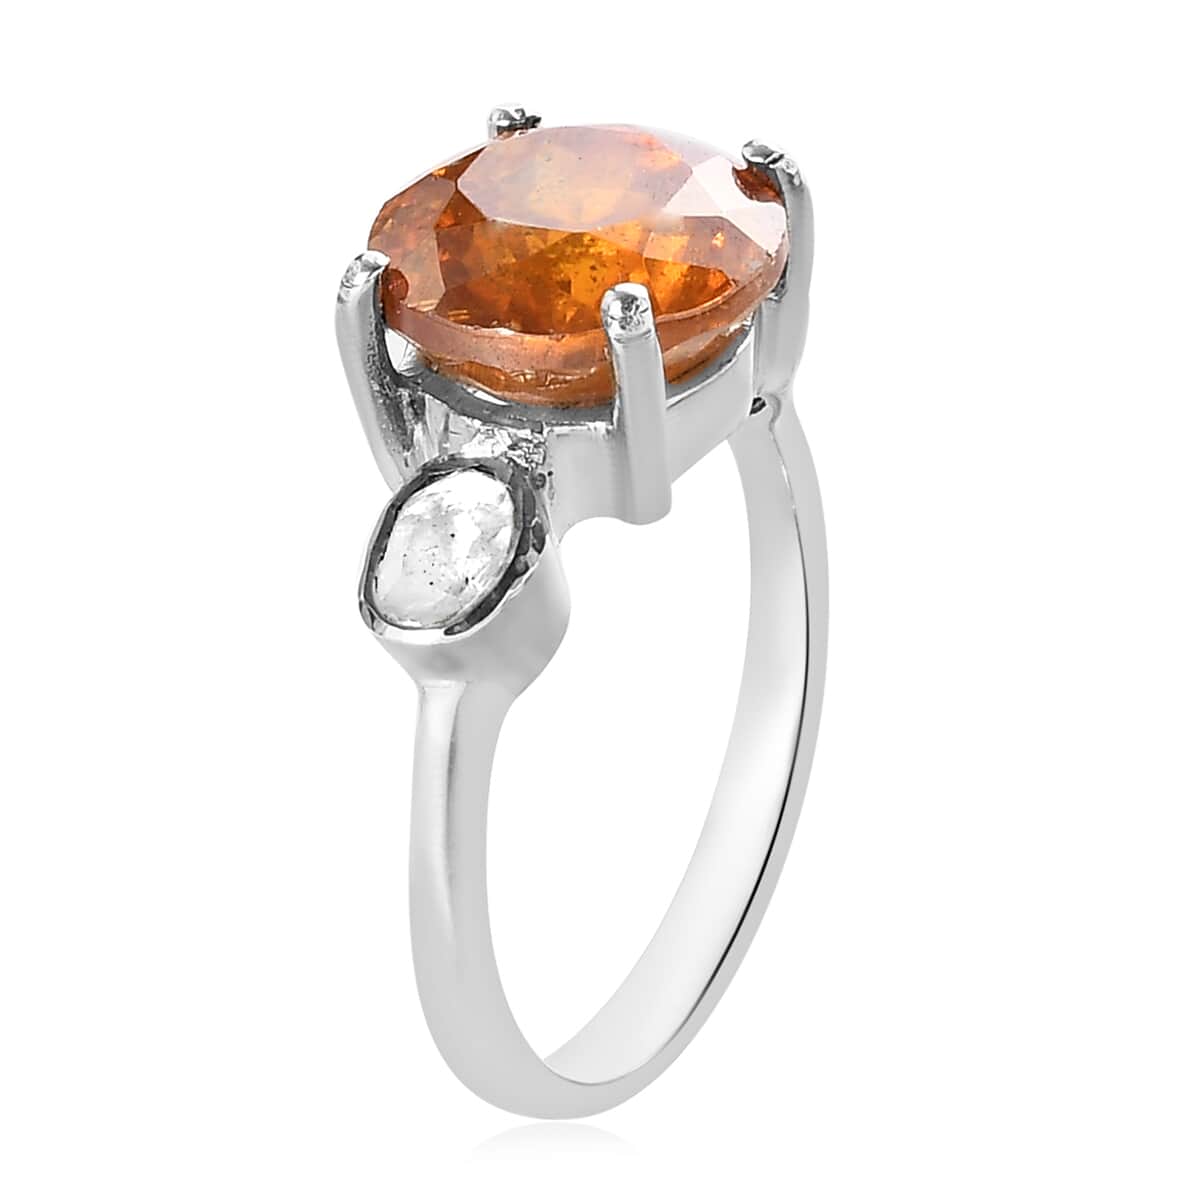 Picos Altos Light Orange Sphalerite and Polki Diamond Ring in Platinum Over Sterling Silver 5.35 ctw image number 3